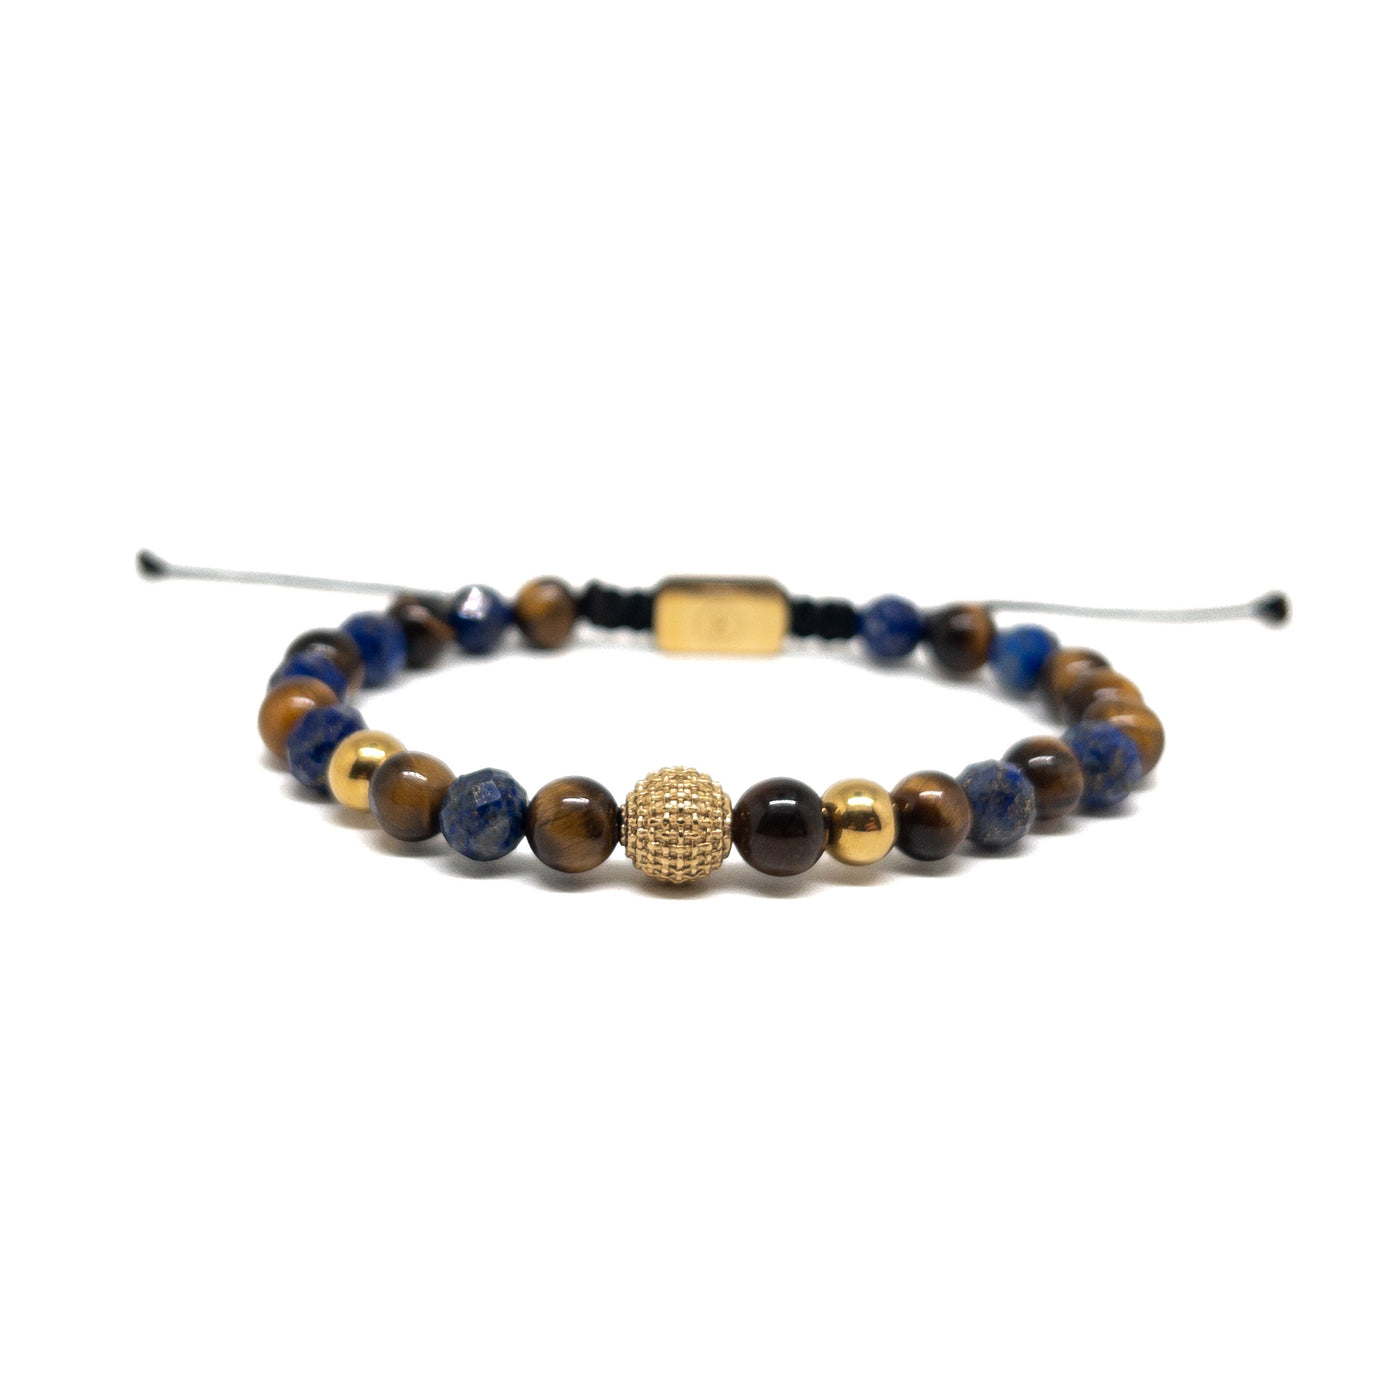 The Lapis Lazuli and Tiger eye Thread Bracelet